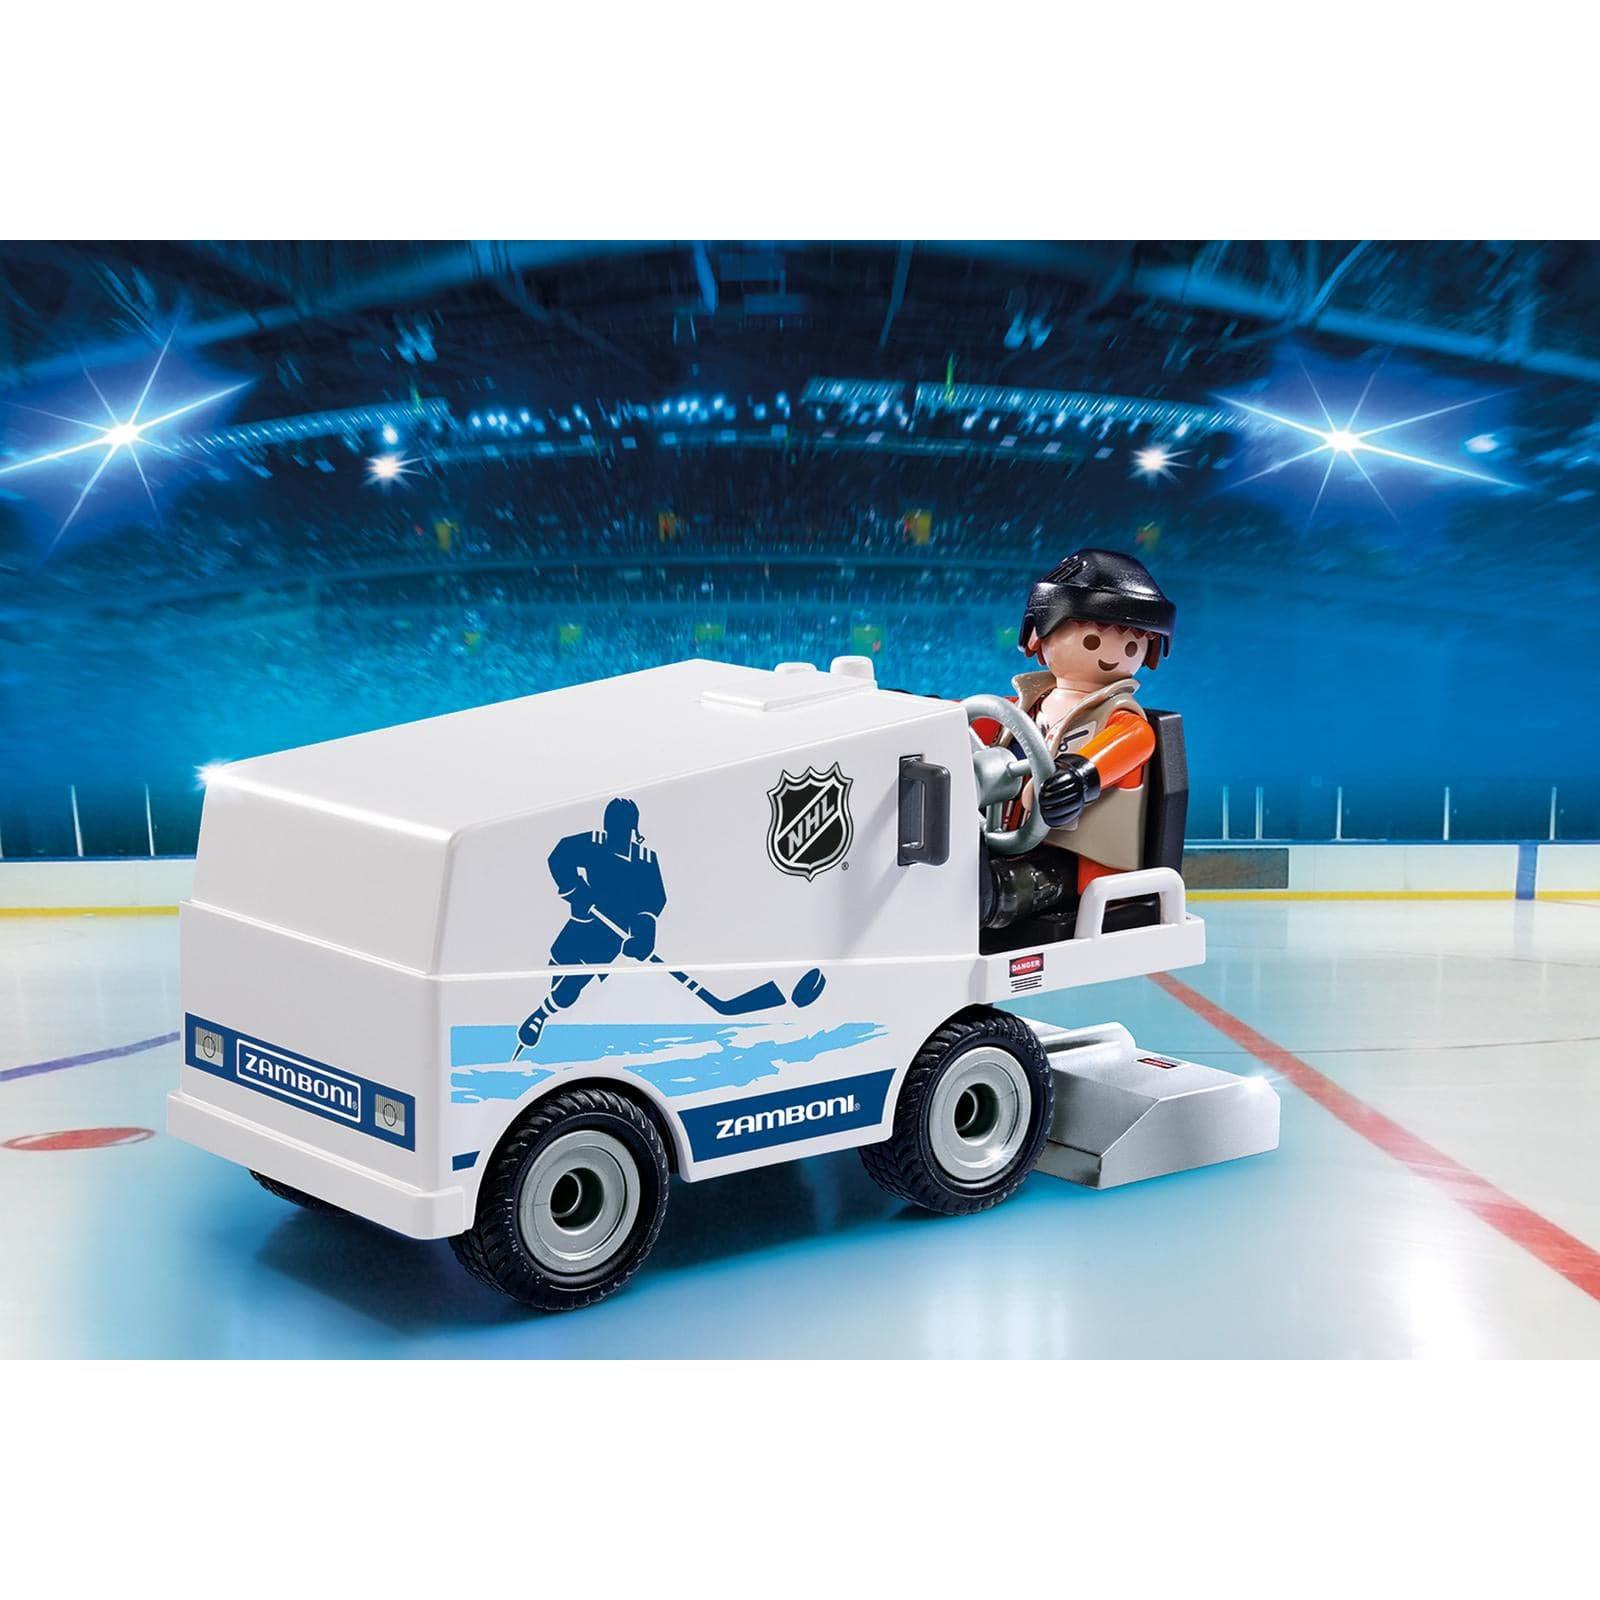 Playmobil-NHL - Zamboni Machine-9213-Legacy Toys